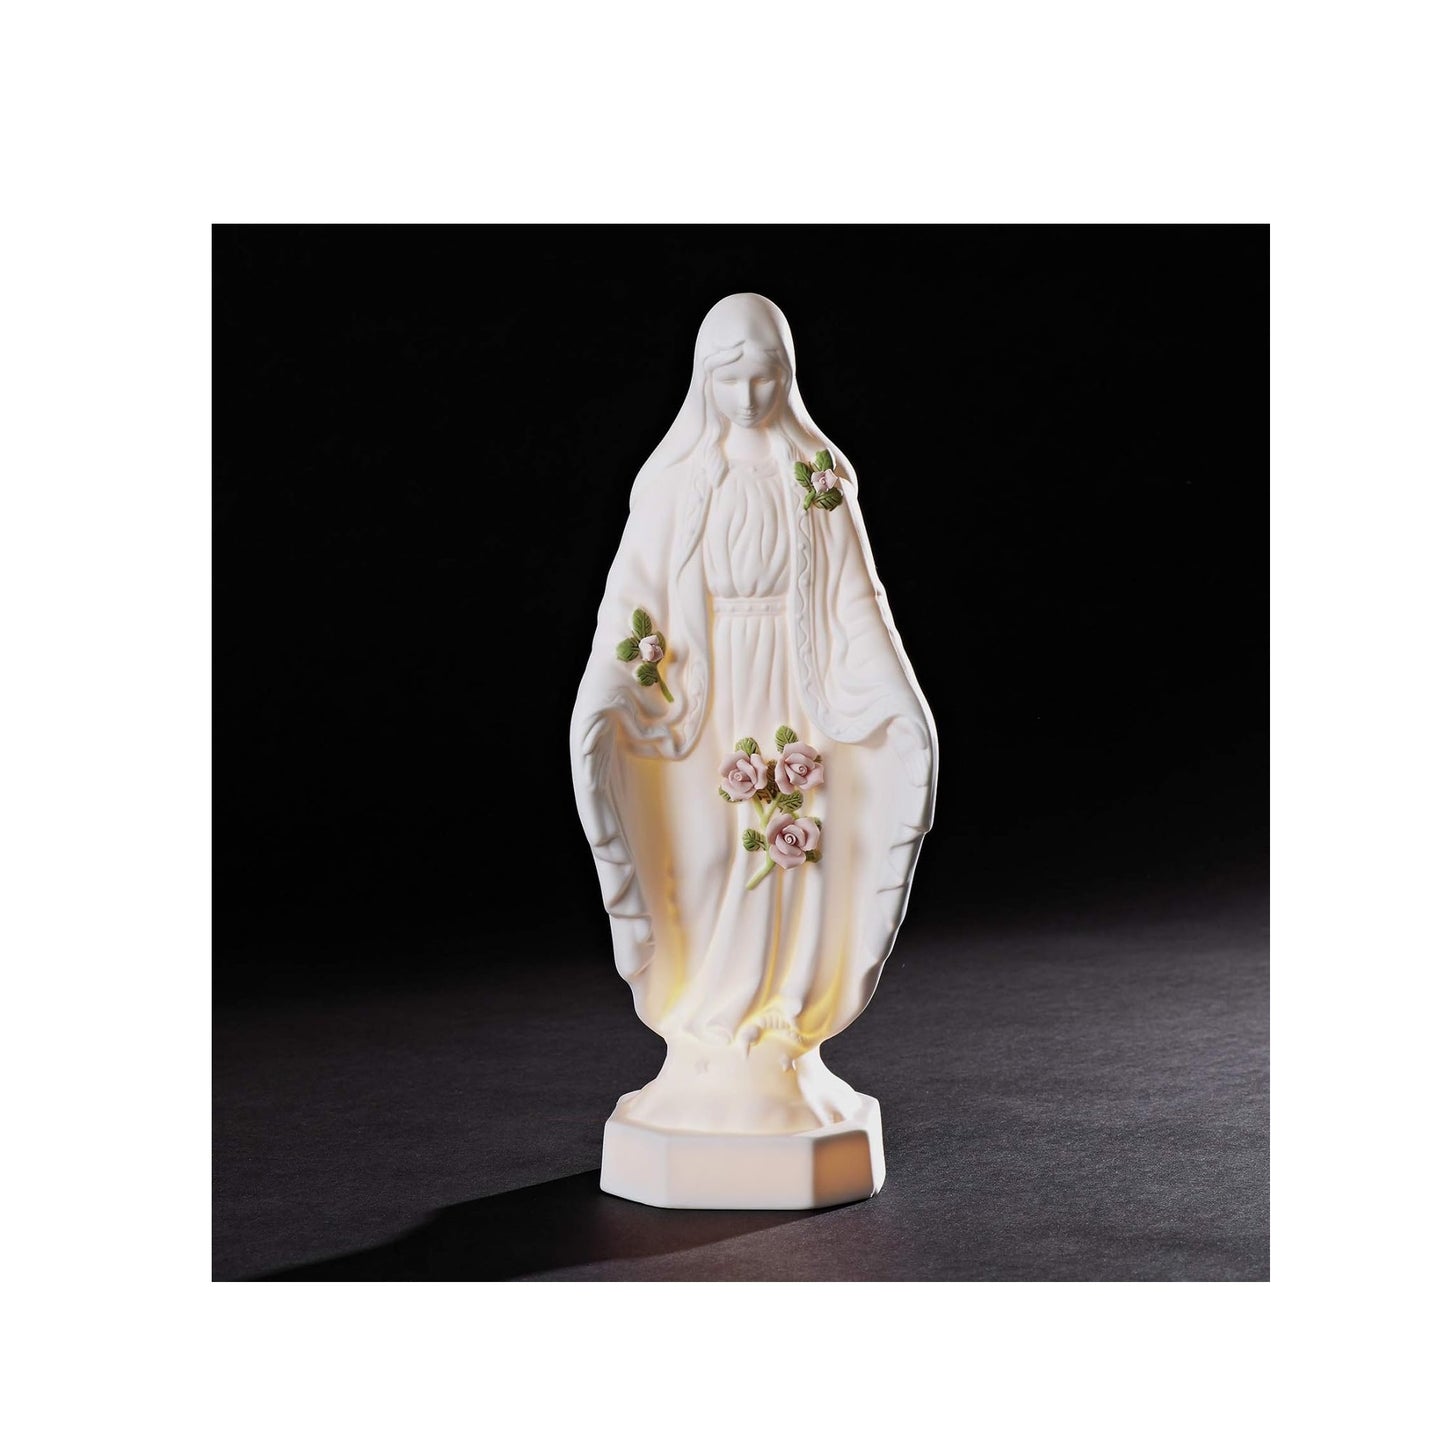 Roman Our Lady of Grace Porcelain Night Light